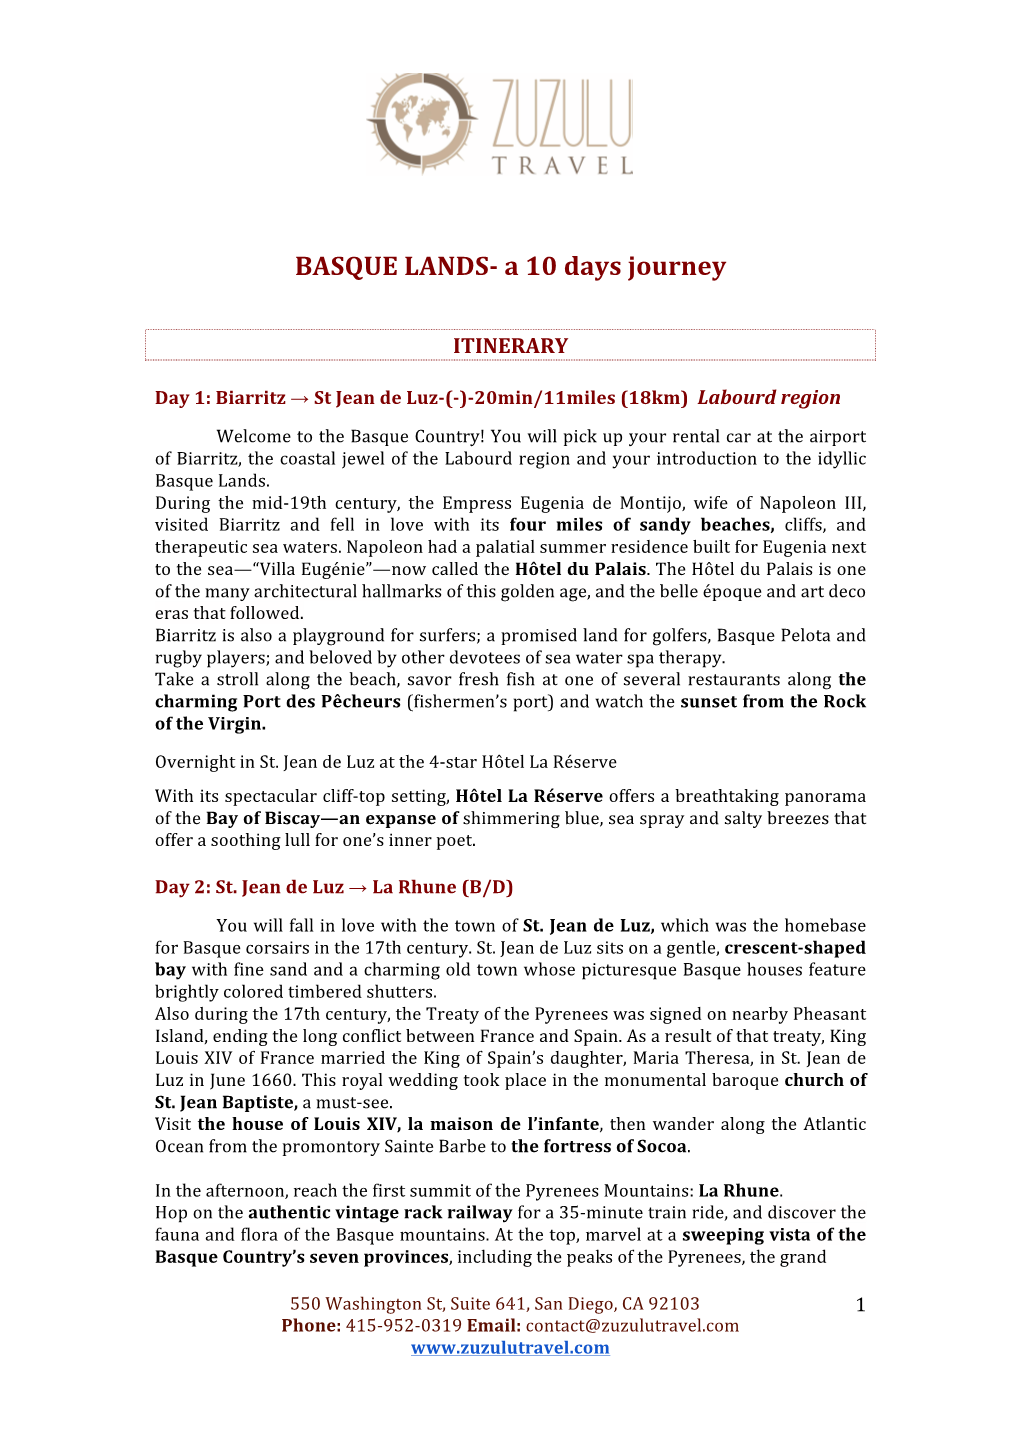 BASQUE LANDS- a 10 Days Journey